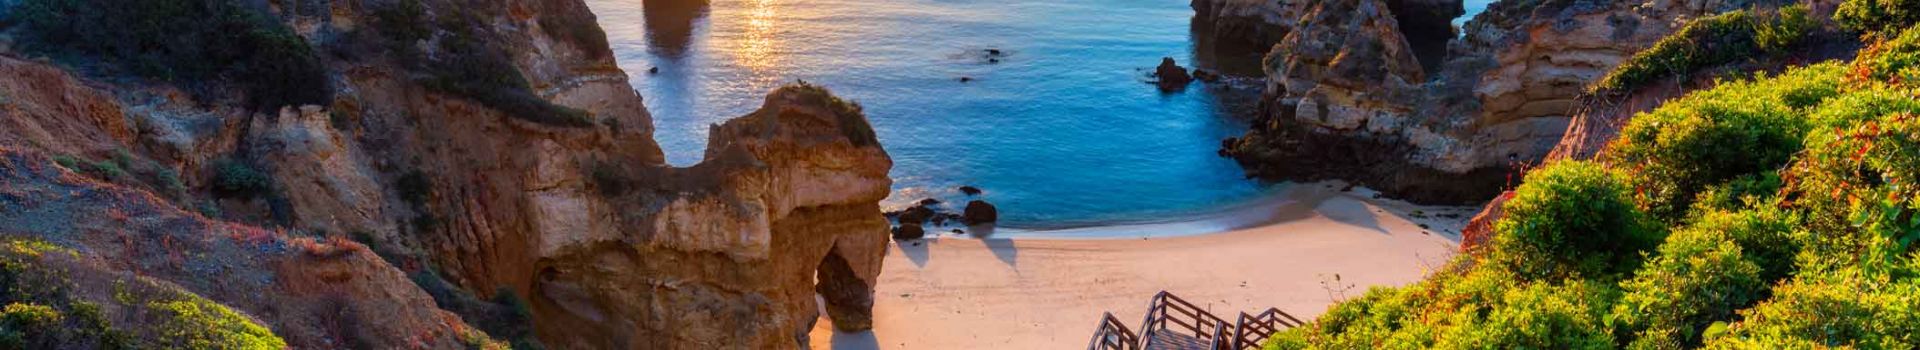 Holidays to Algarve | Book Flights & Hotel | Cassidy Travel